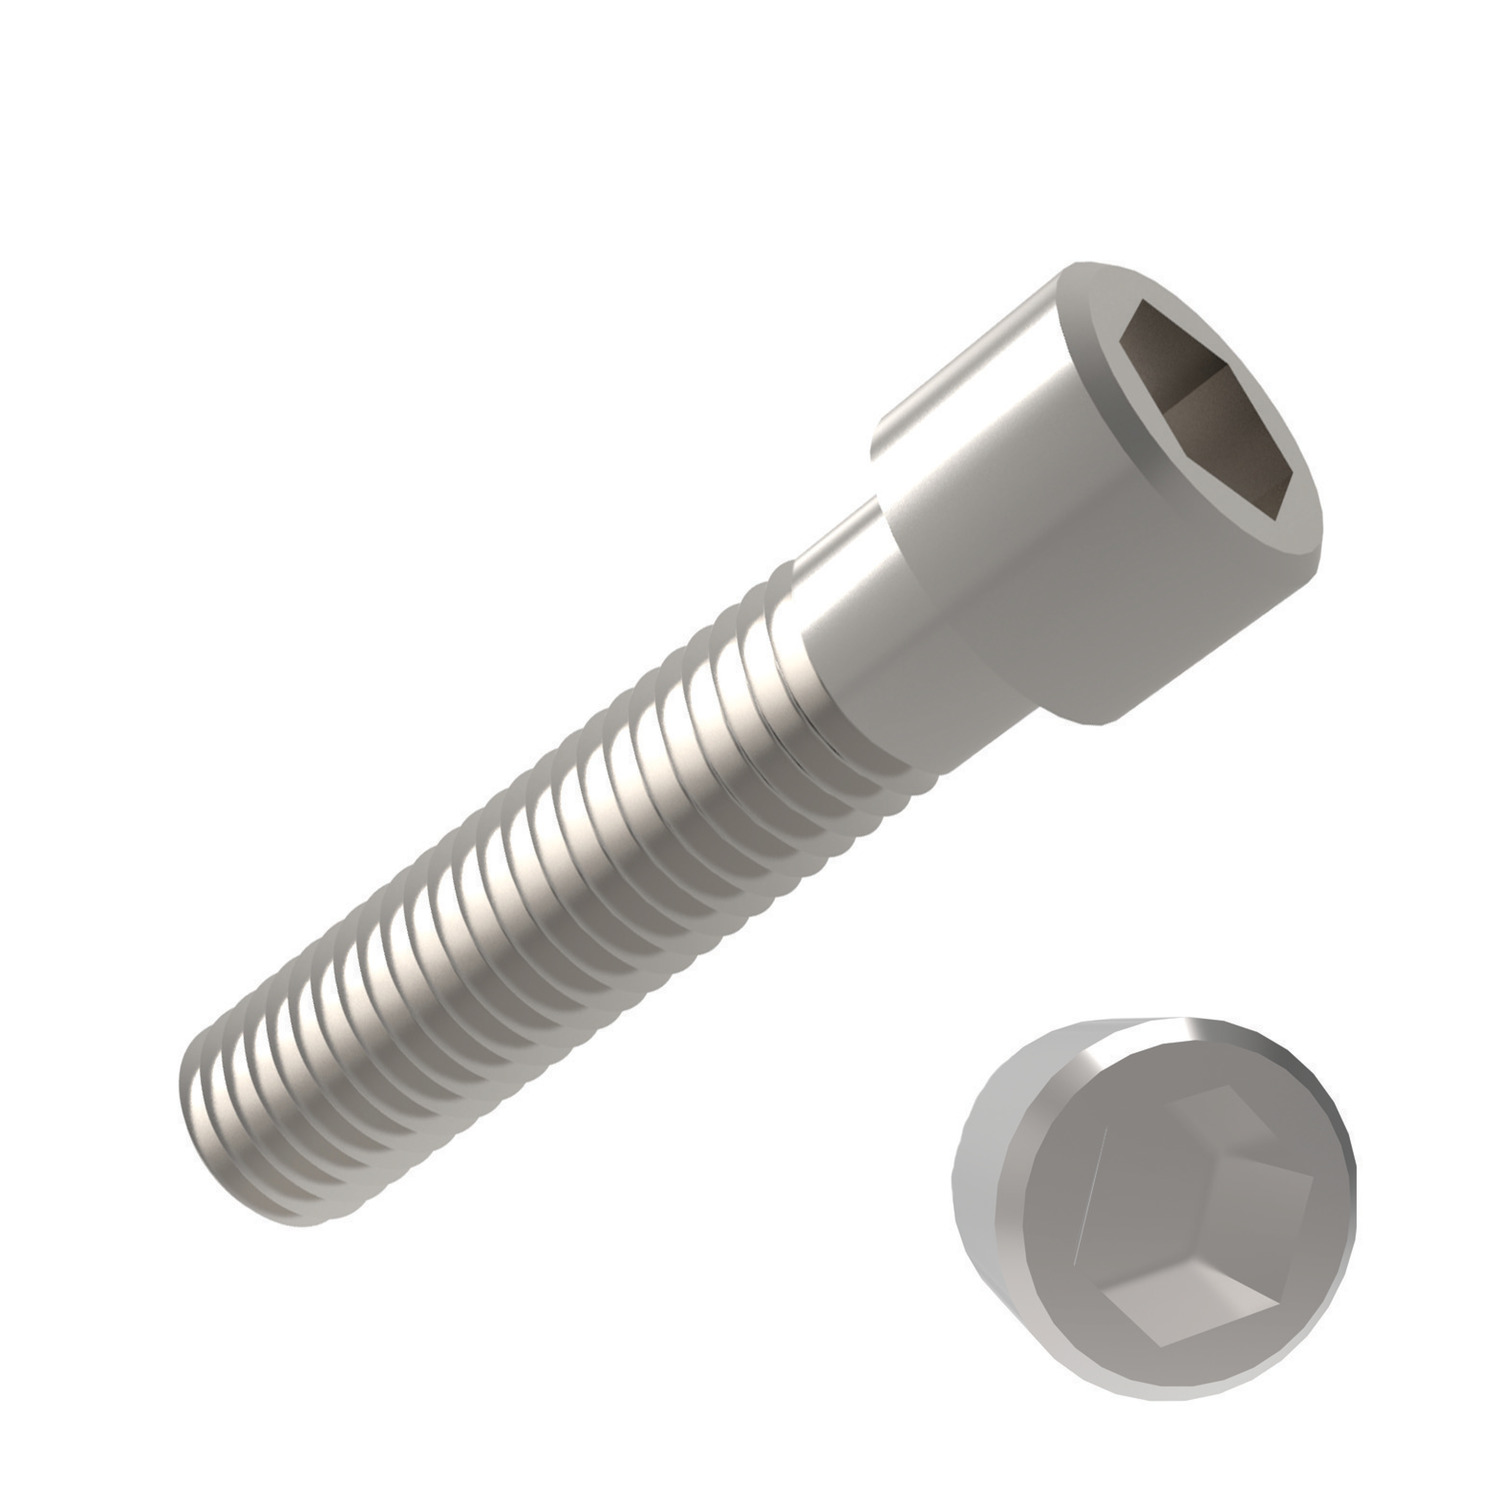 Product P0200.A4, Socket Cap Screws 316 series, stainless steel / 